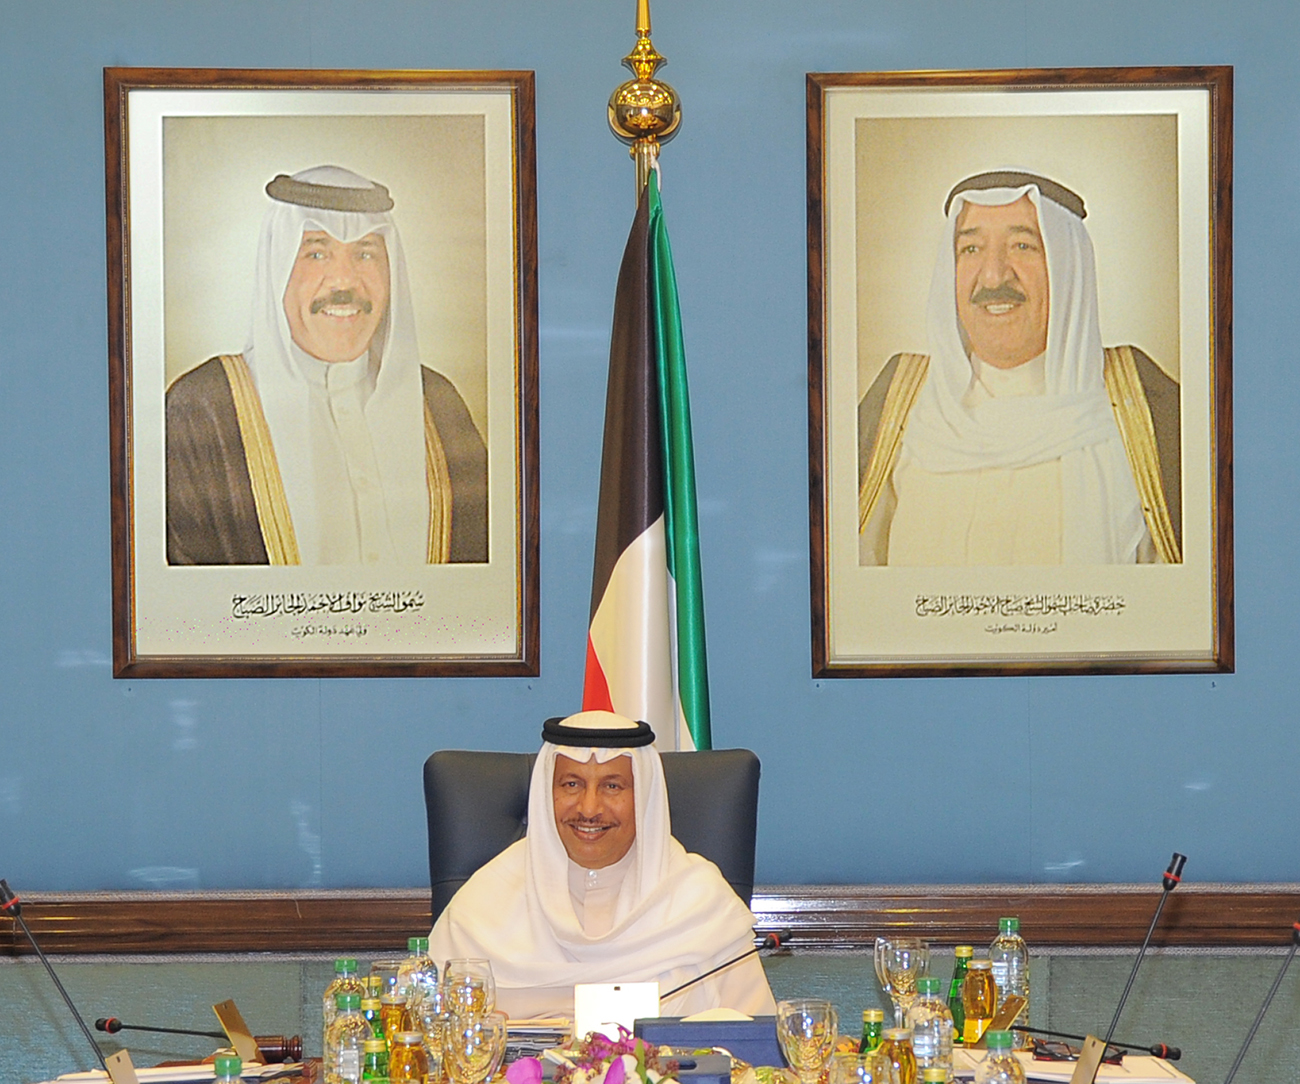 His Highness the Prime Minister Sheikh Jaber Al-Mubarak Al-Hamad Al-Sabah presides the cabinet meeting